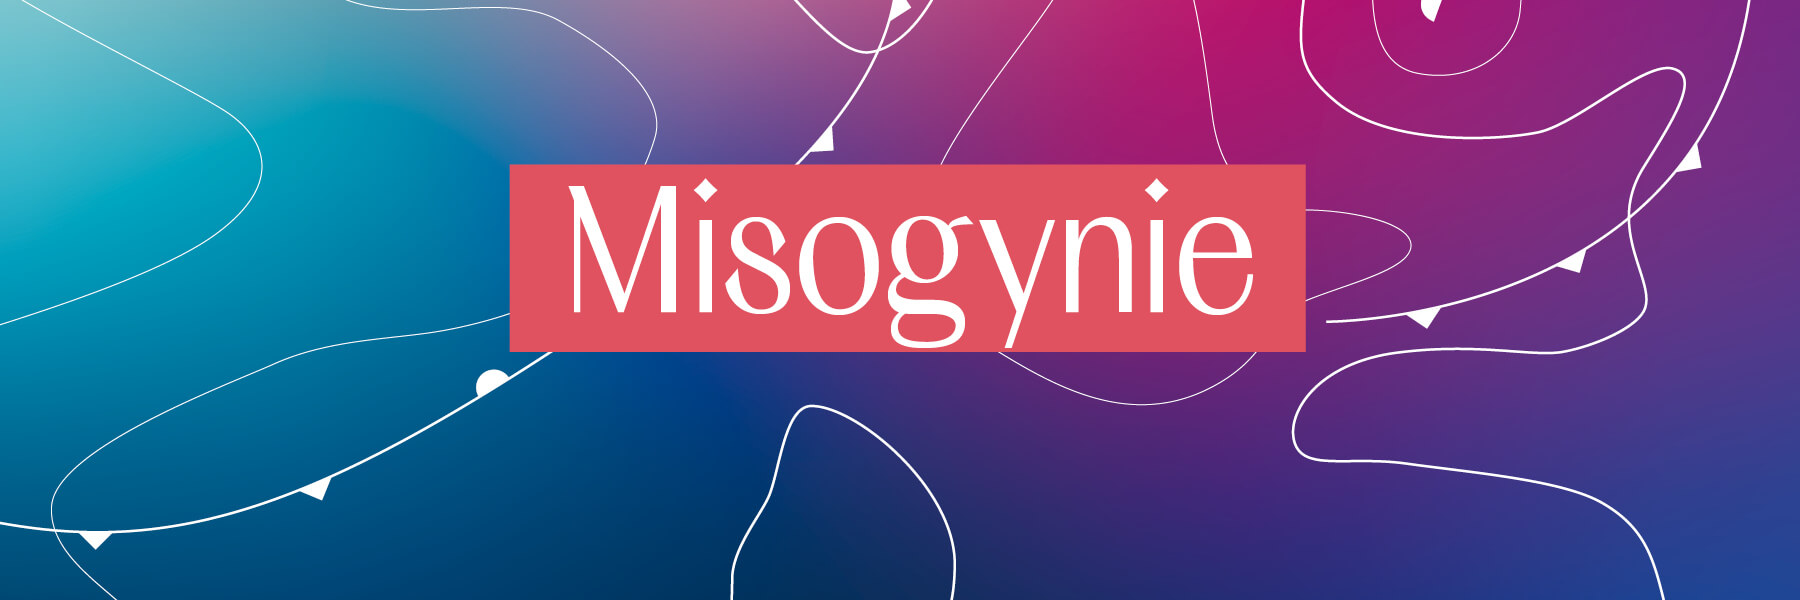 FES Gender Glossar - Misogynie